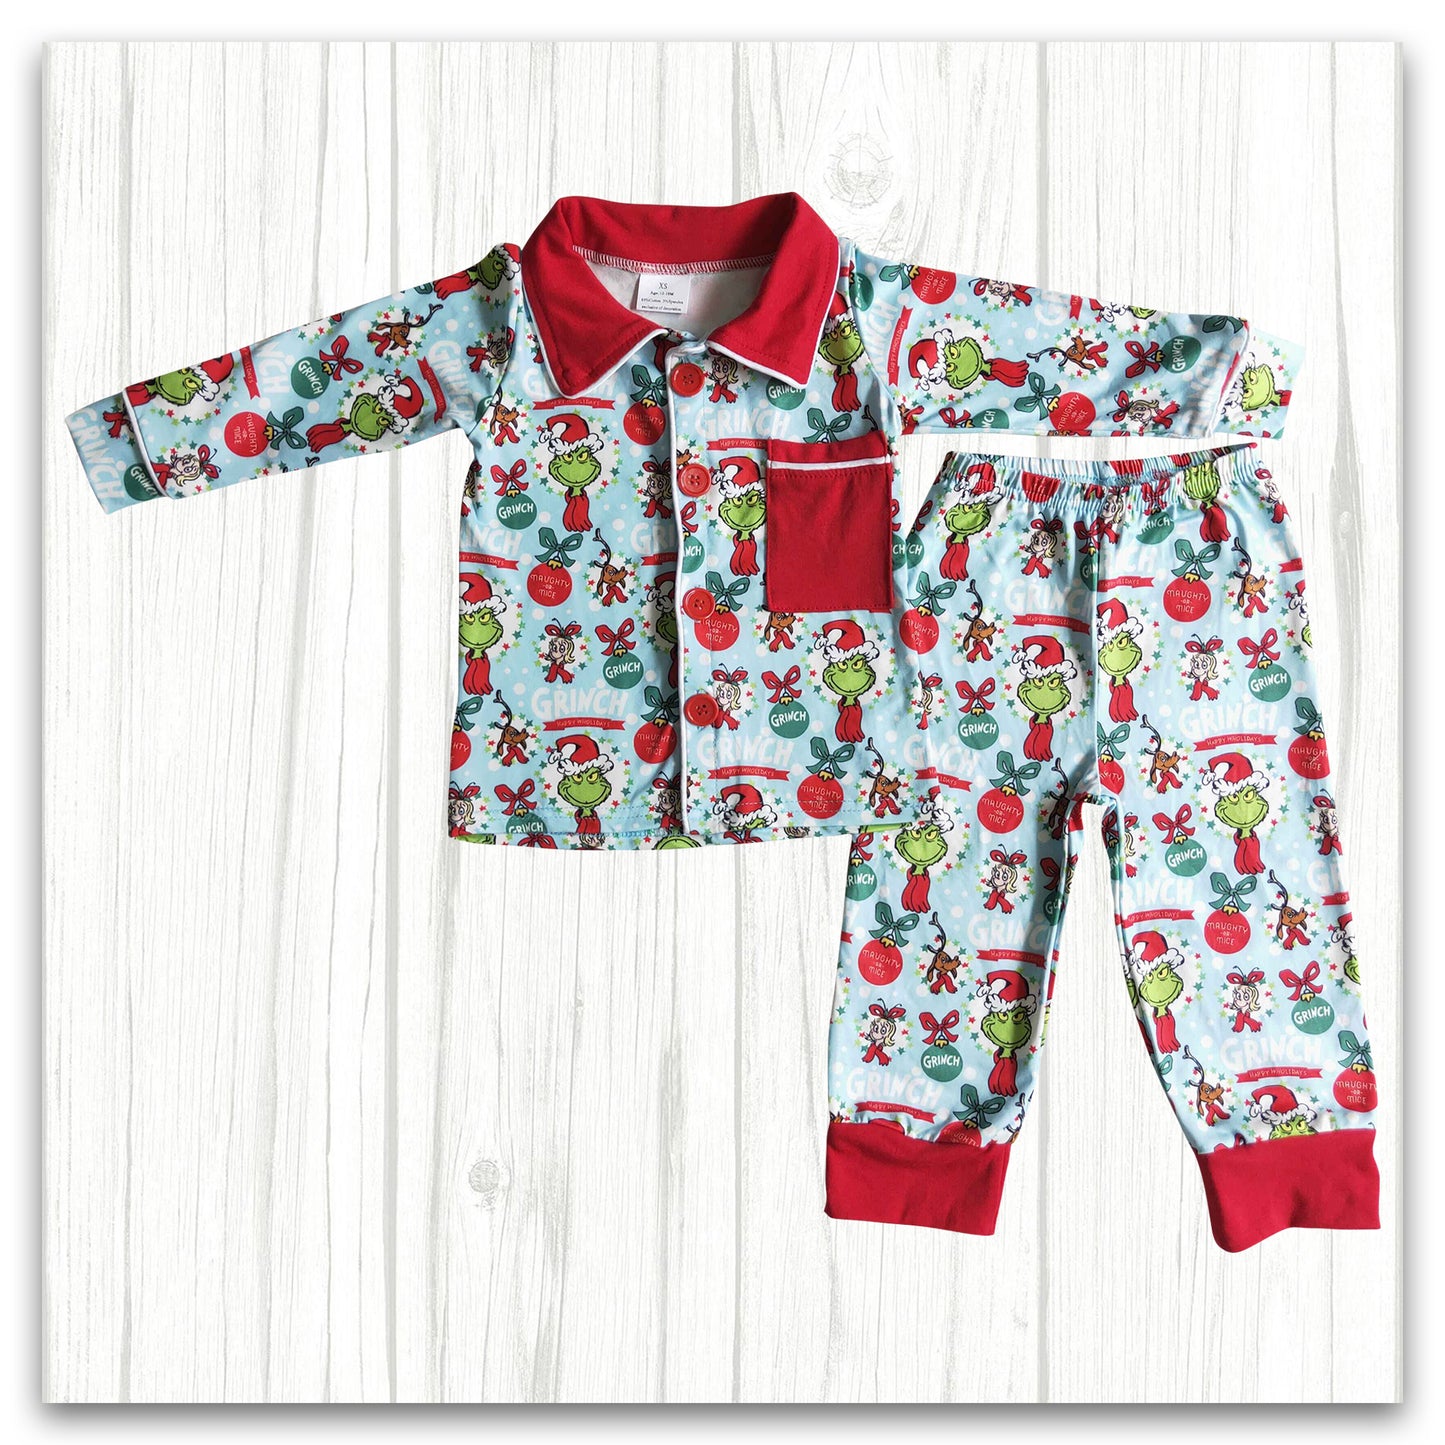 Boy Christmas Pajamas Outfit with Pocket